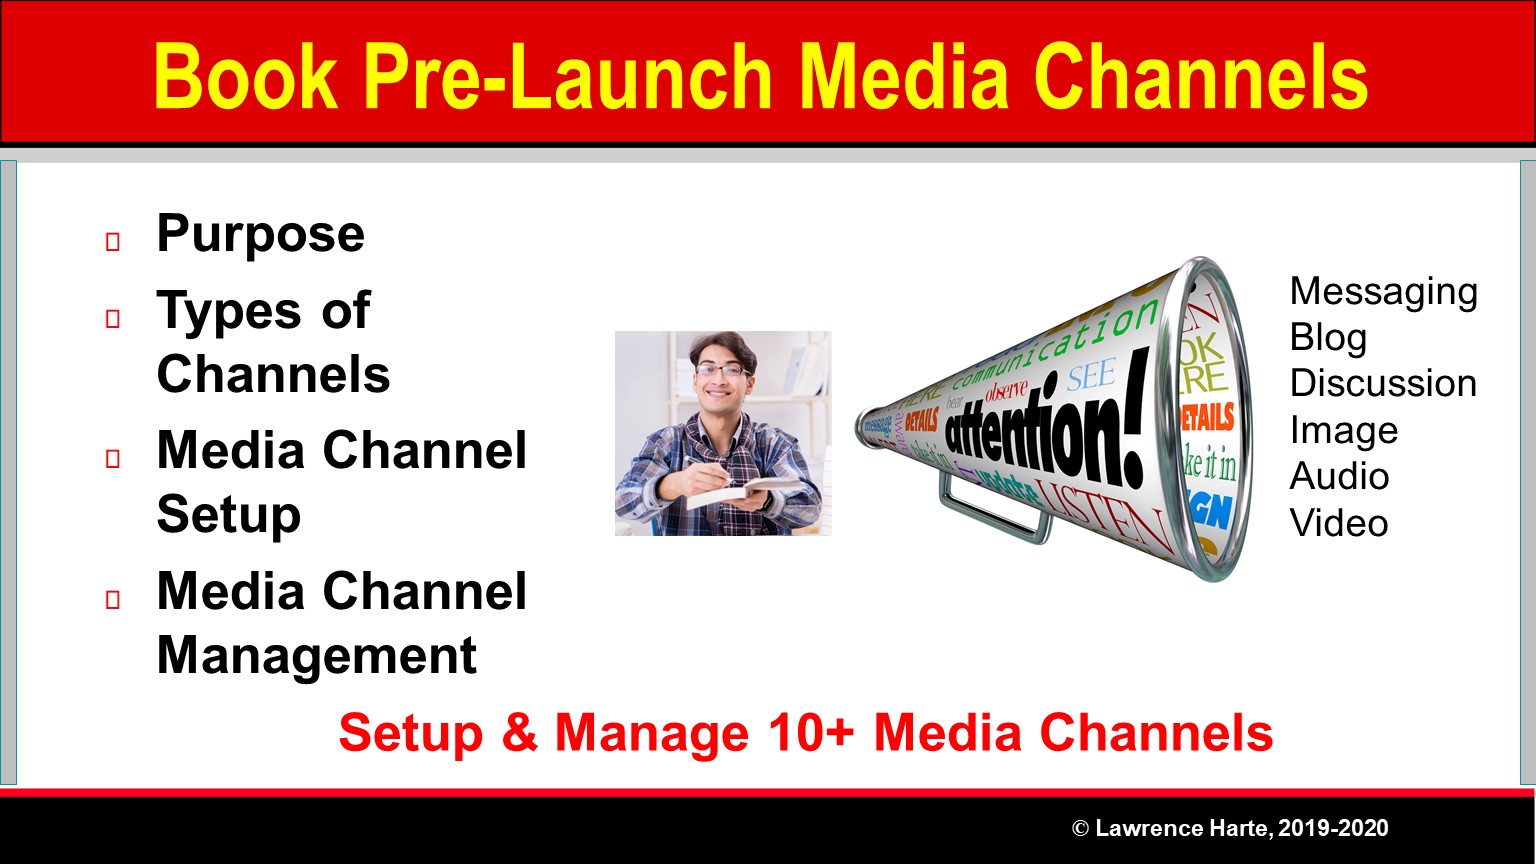 Book Pre-Launch Marketing Media Channels